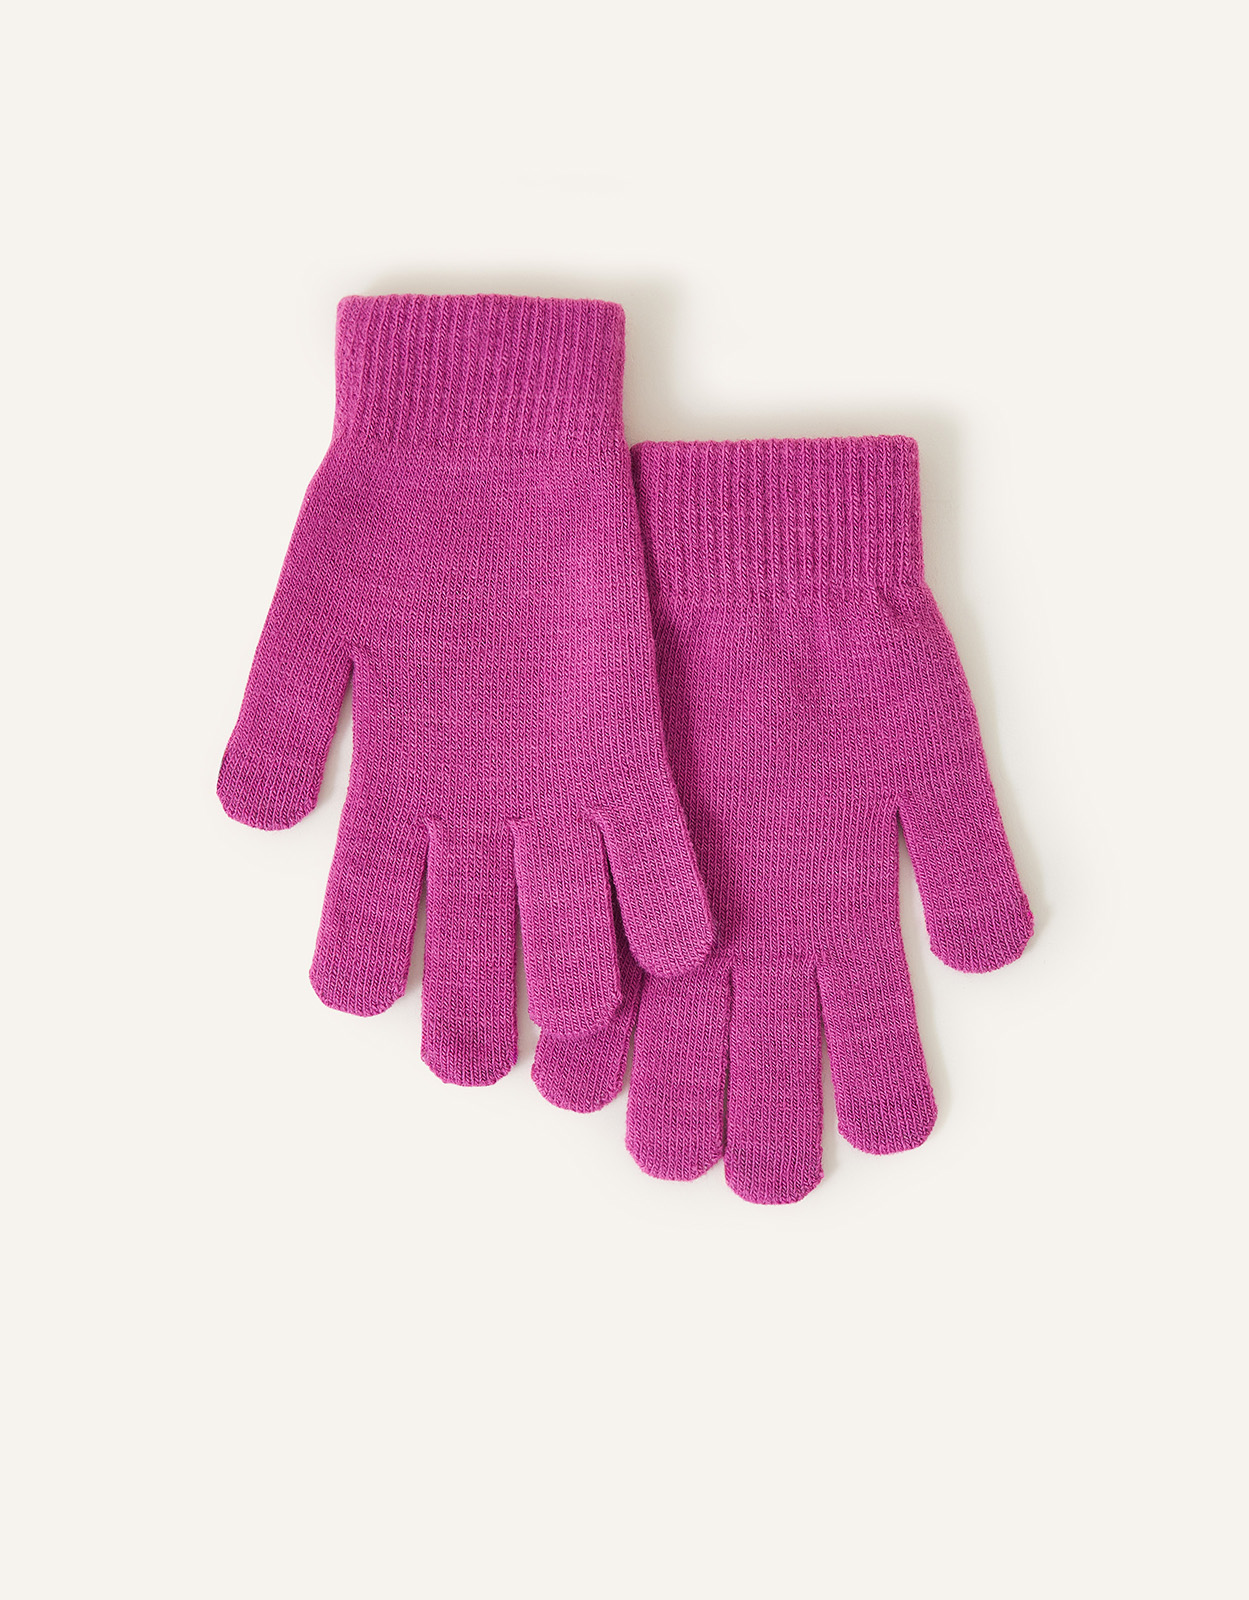 Accessorize Super-Stretch Touchscreen Gloves Pink